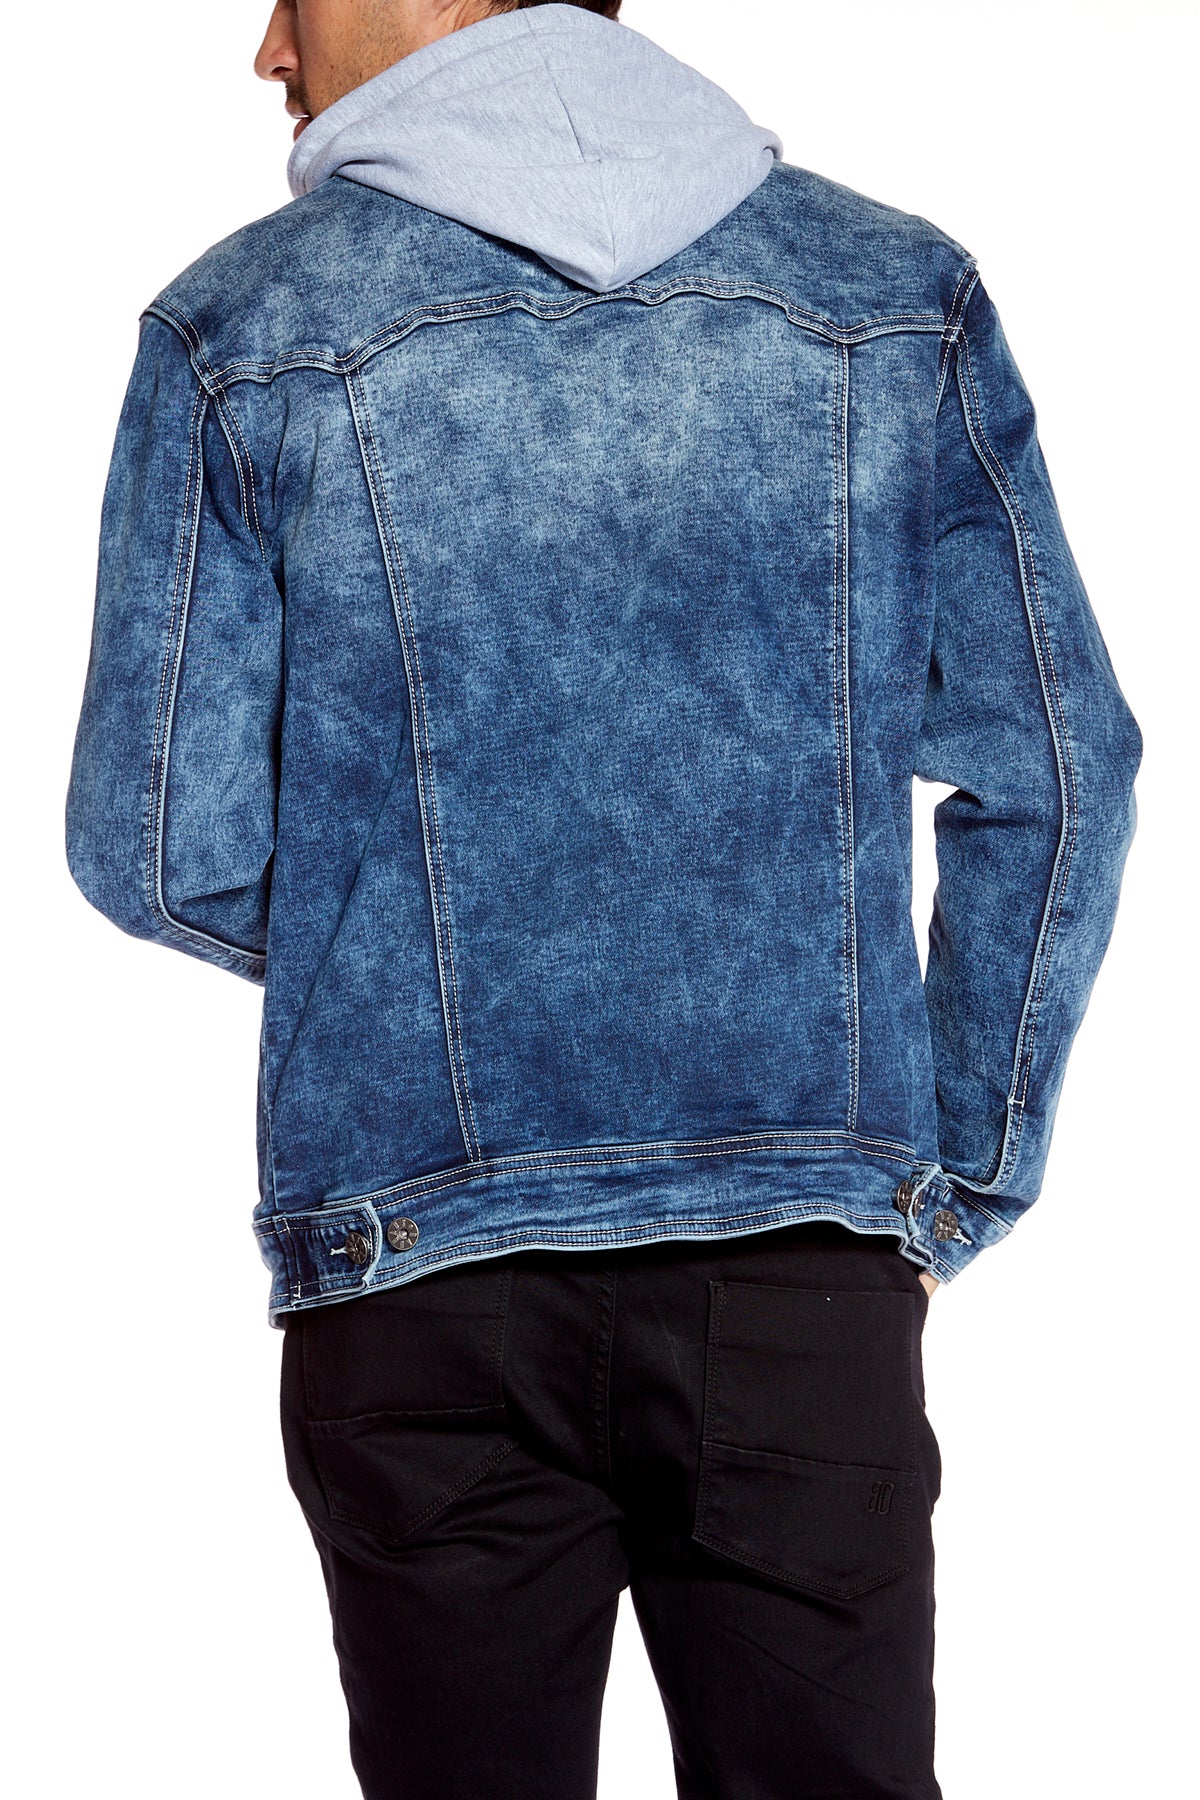 Men's Denim Jacket With Built-In Hood - Medium Blue Acid Wash - DENIM SOCIETY™